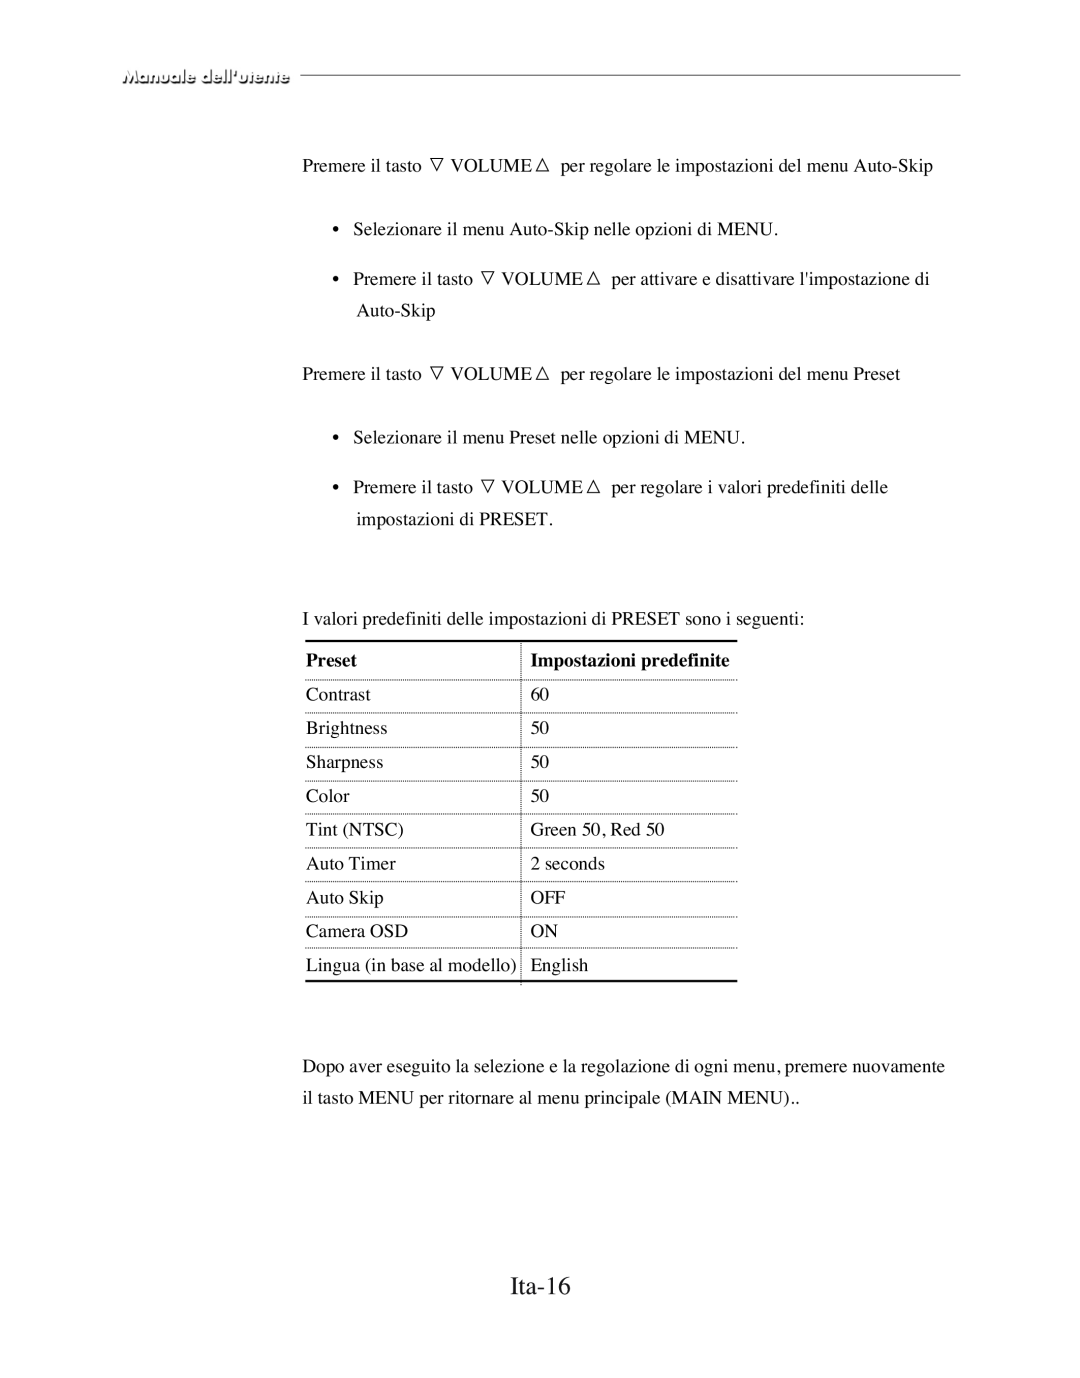 Samsung SMC-152FP manual Ita-16, Preset, Impostazioni predefinite 